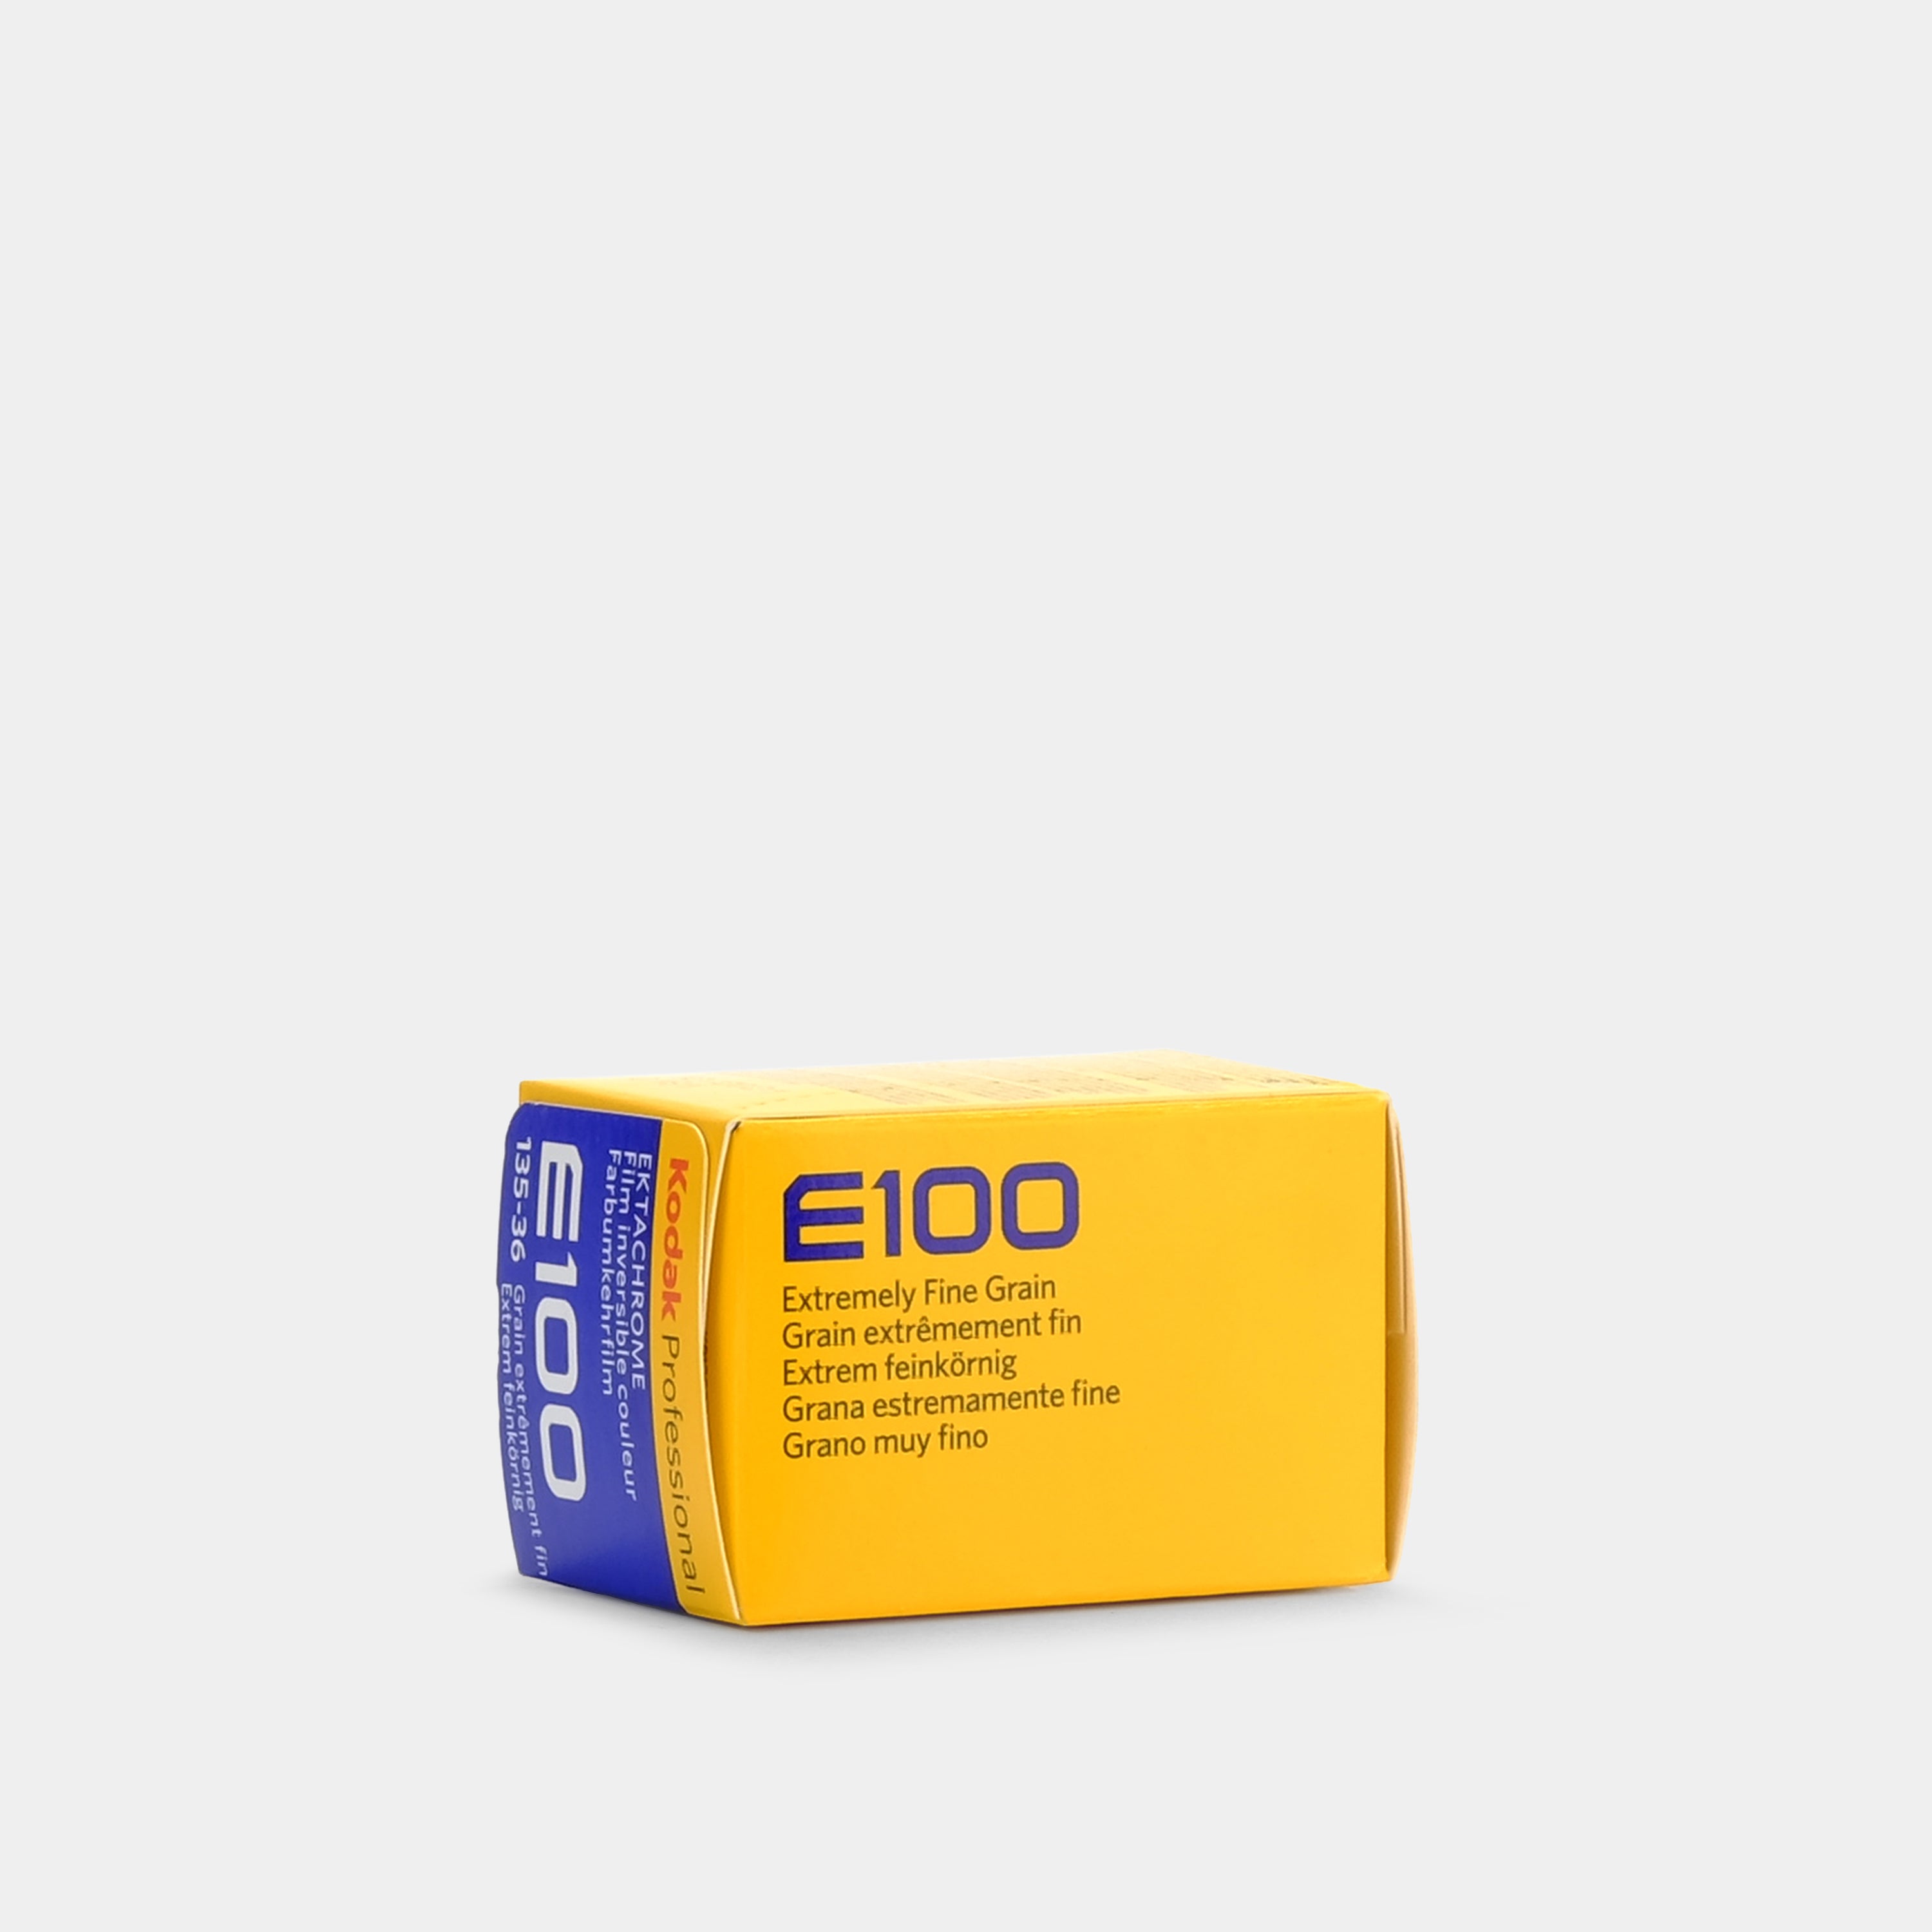 Kodak Ektachrome E100 Color Reversal 35mm Film (36 Exposures)